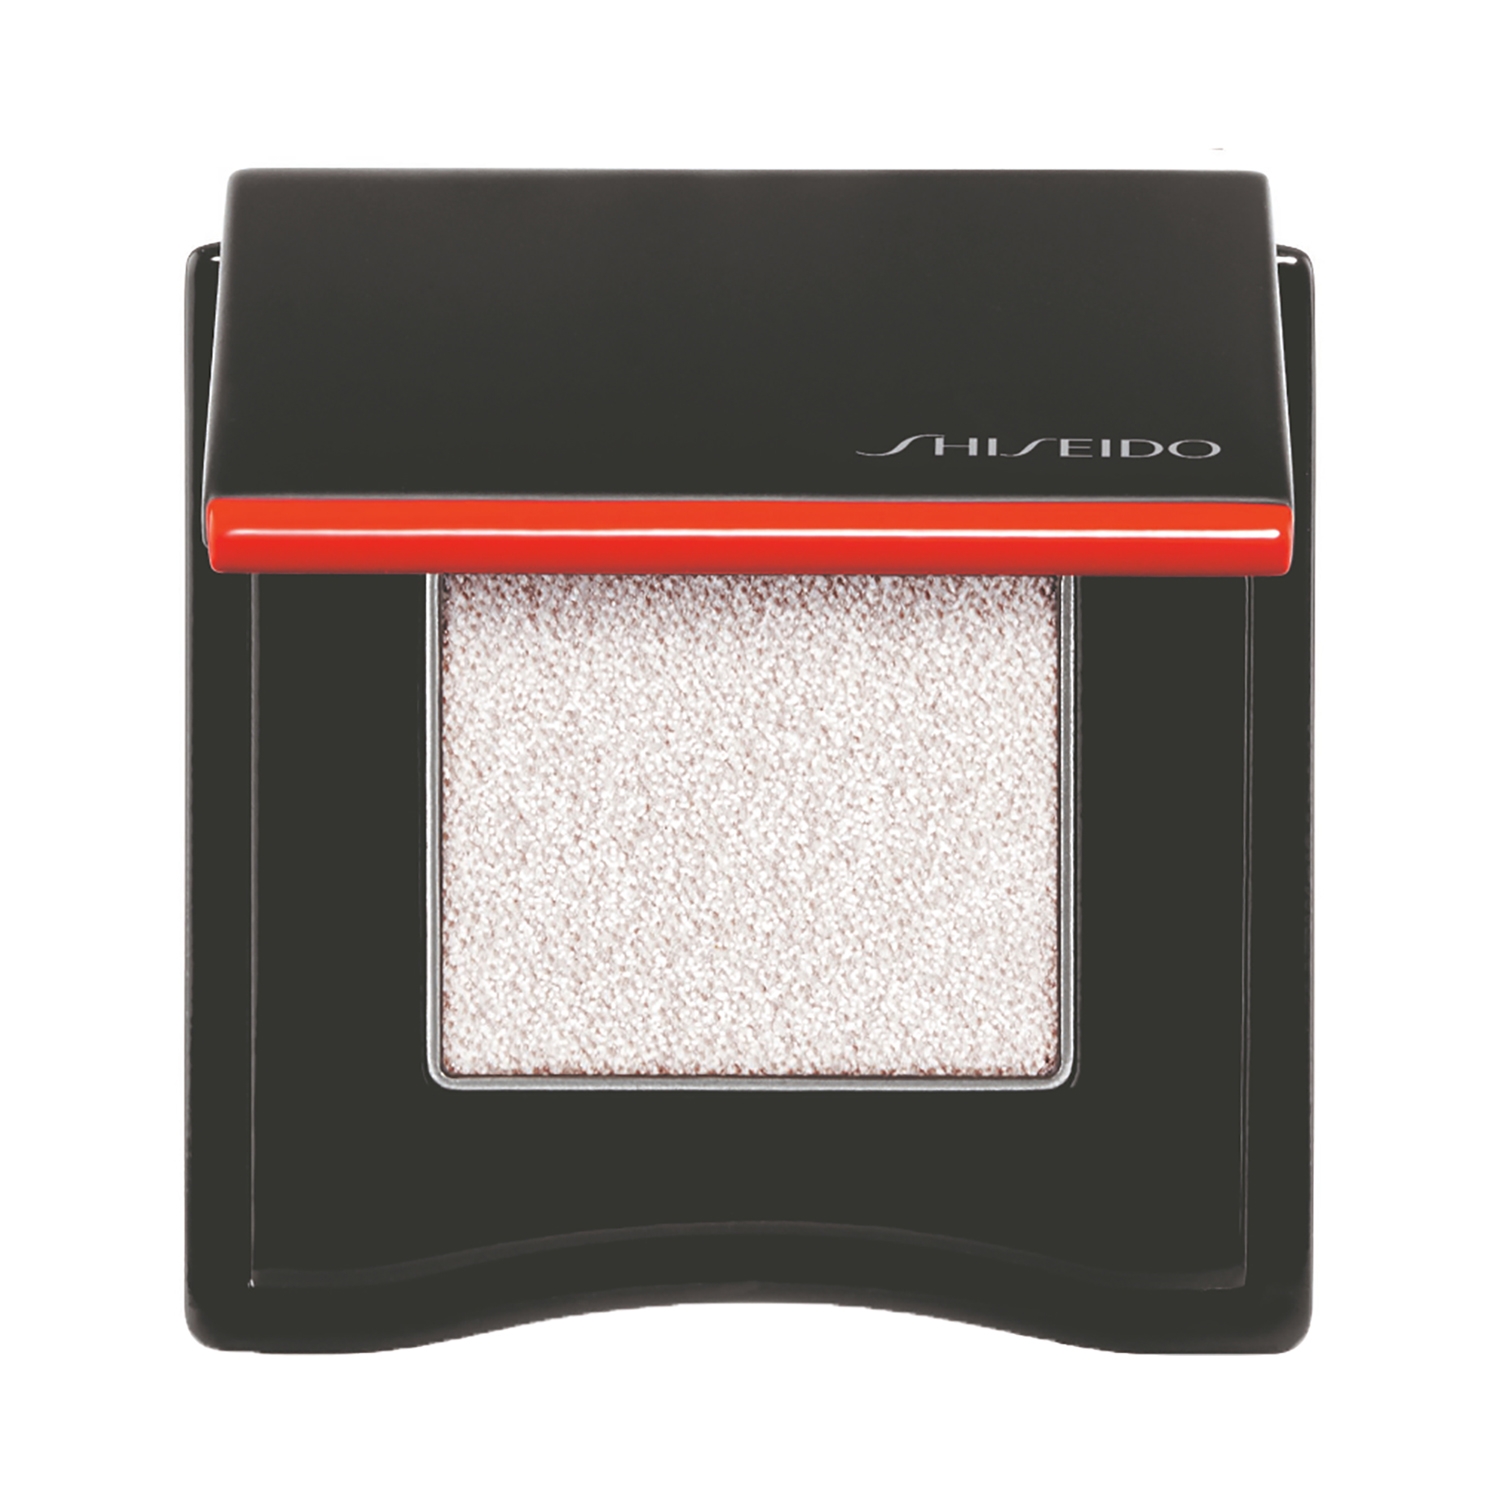 Shiseido | Shiseido Pop Powdergel Eye Shadow - 01 Shin Crystal (2.2g)